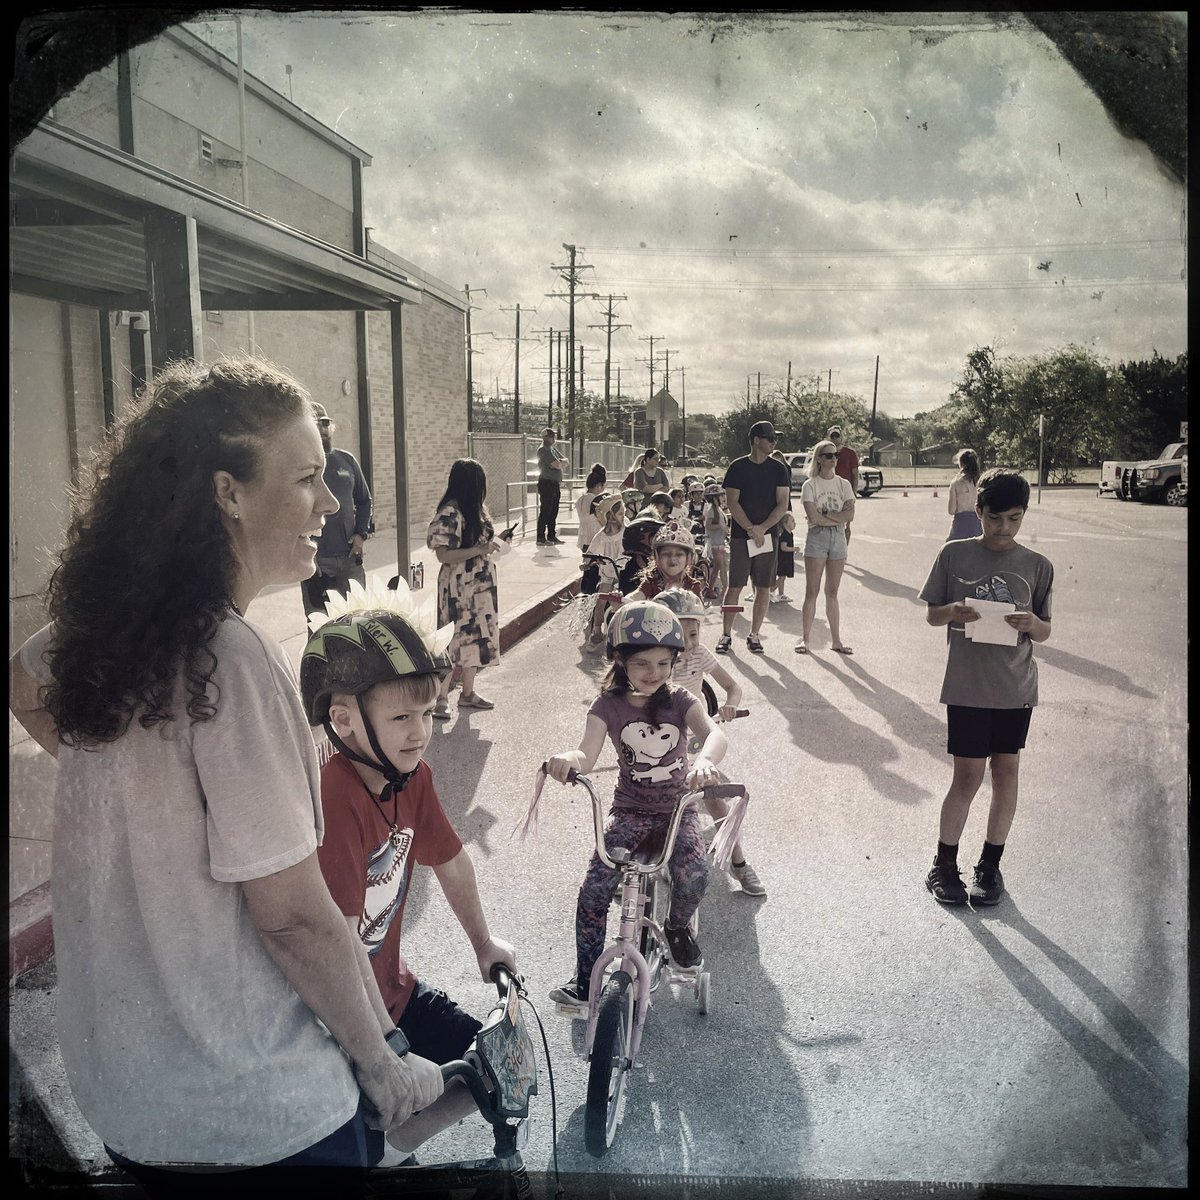 #bikerodeo @CuringtonElem lots of excited #Kinder students showing their #helmetflair & #bicyclesafety @BoerneISD